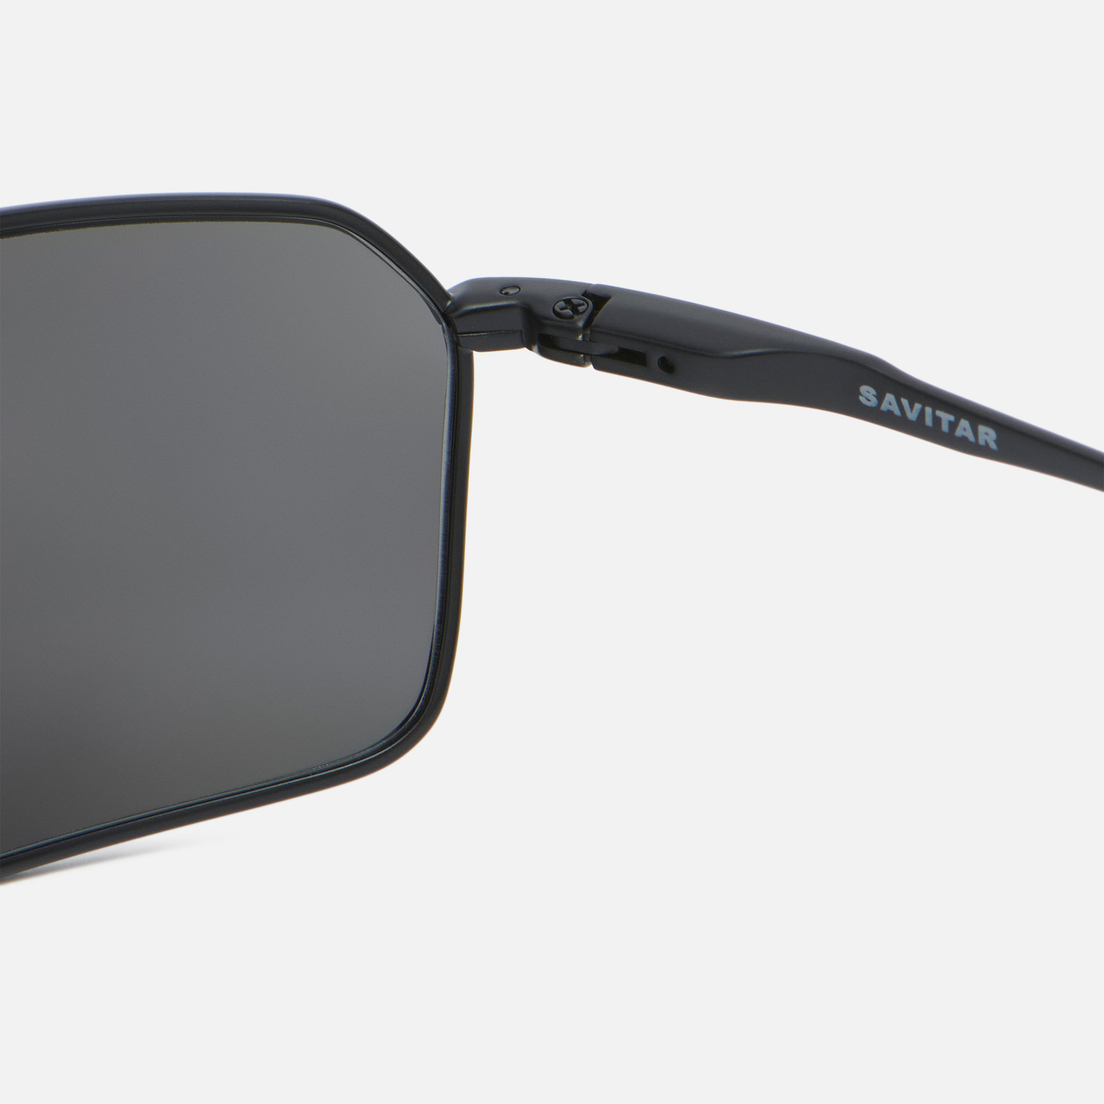 Oakley Солнцезащитные очки Savitar